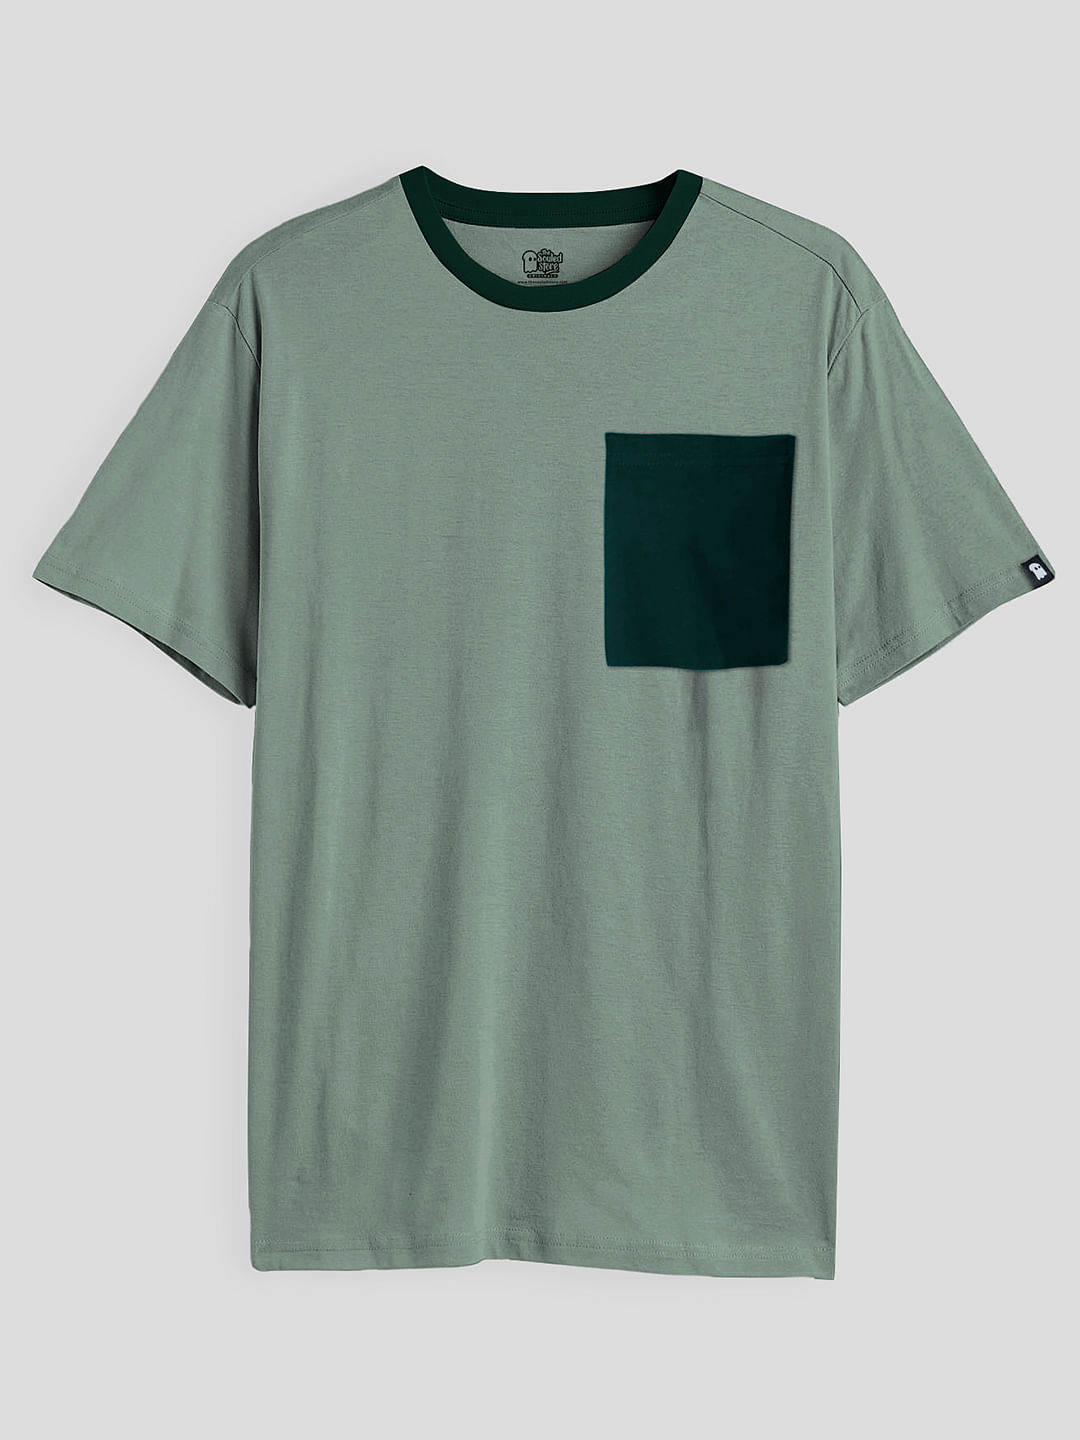 Buy Solids Sage Green Pocket Men Relaxed Fit T Shirt Online